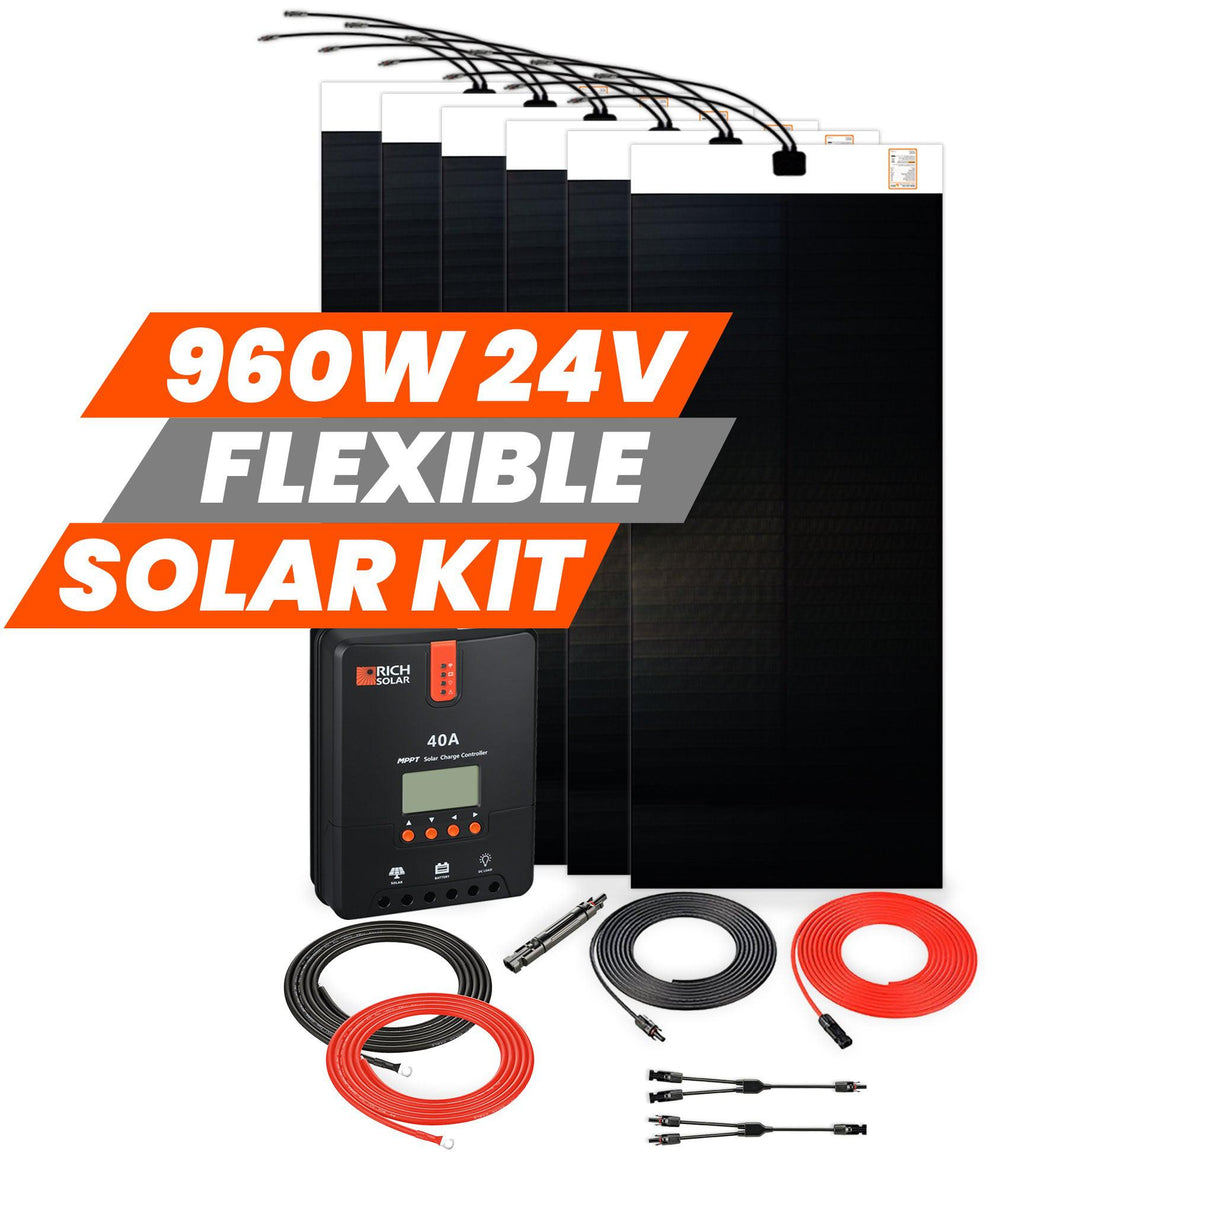 Rich Solar | 960 Watt Flexible Solar Kit